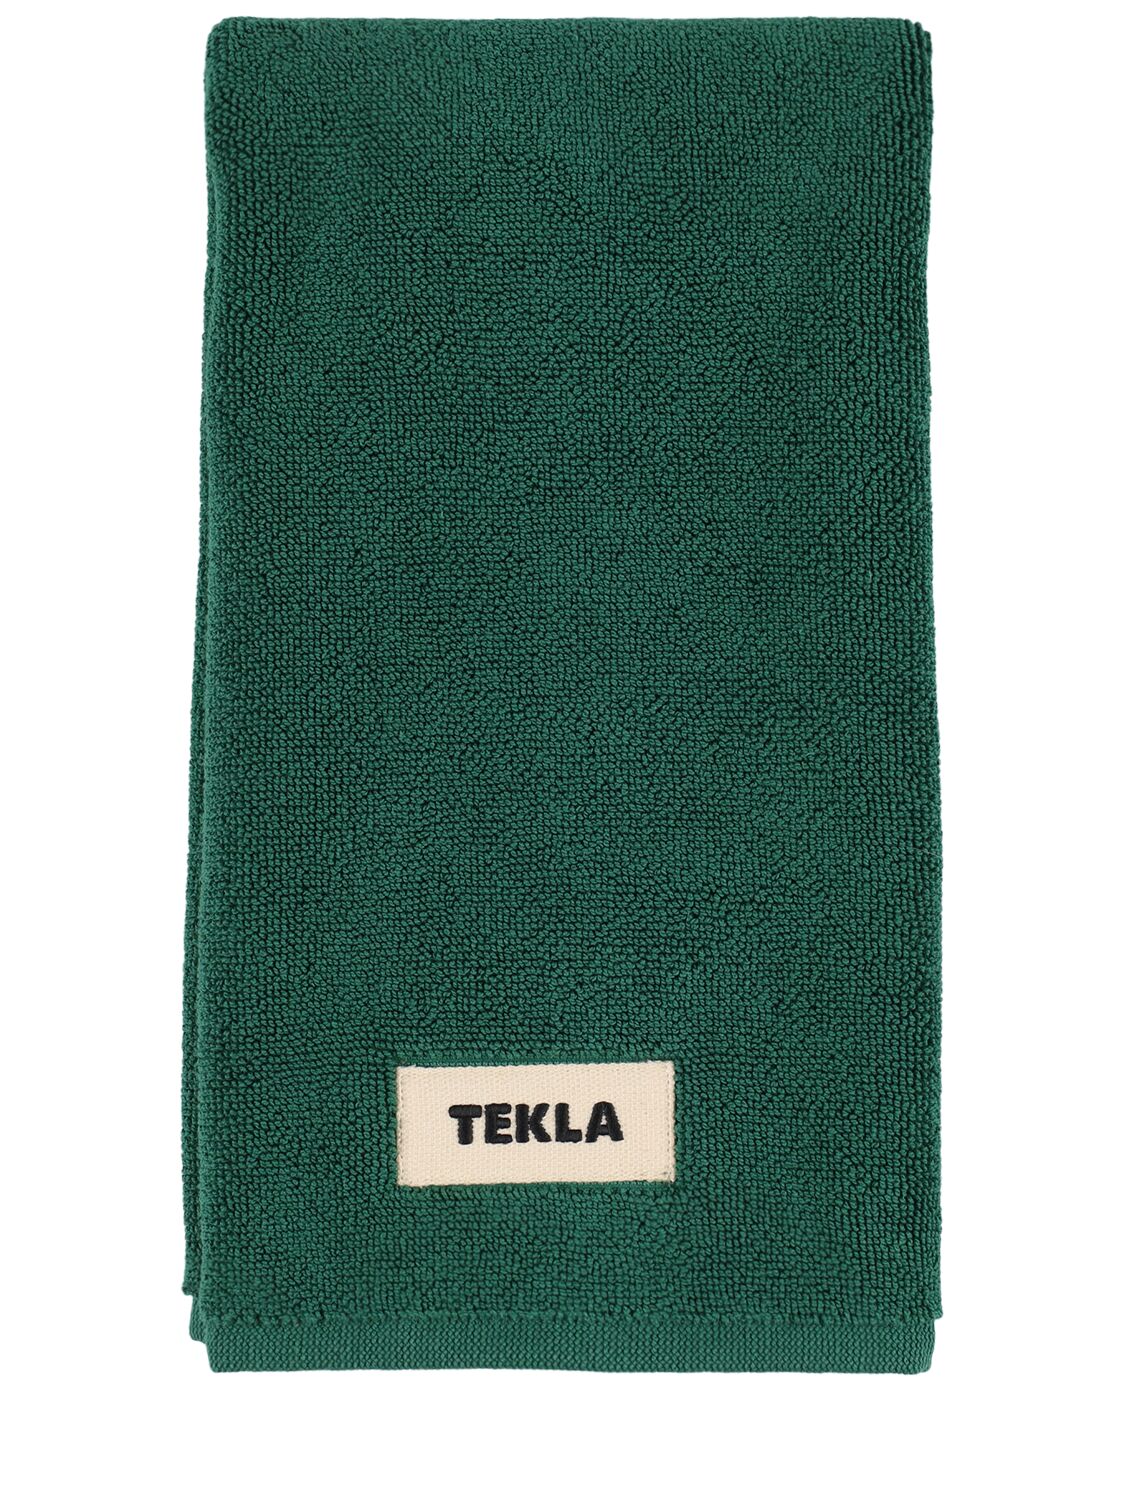 Shop Tekla Teal Green Bath Mat